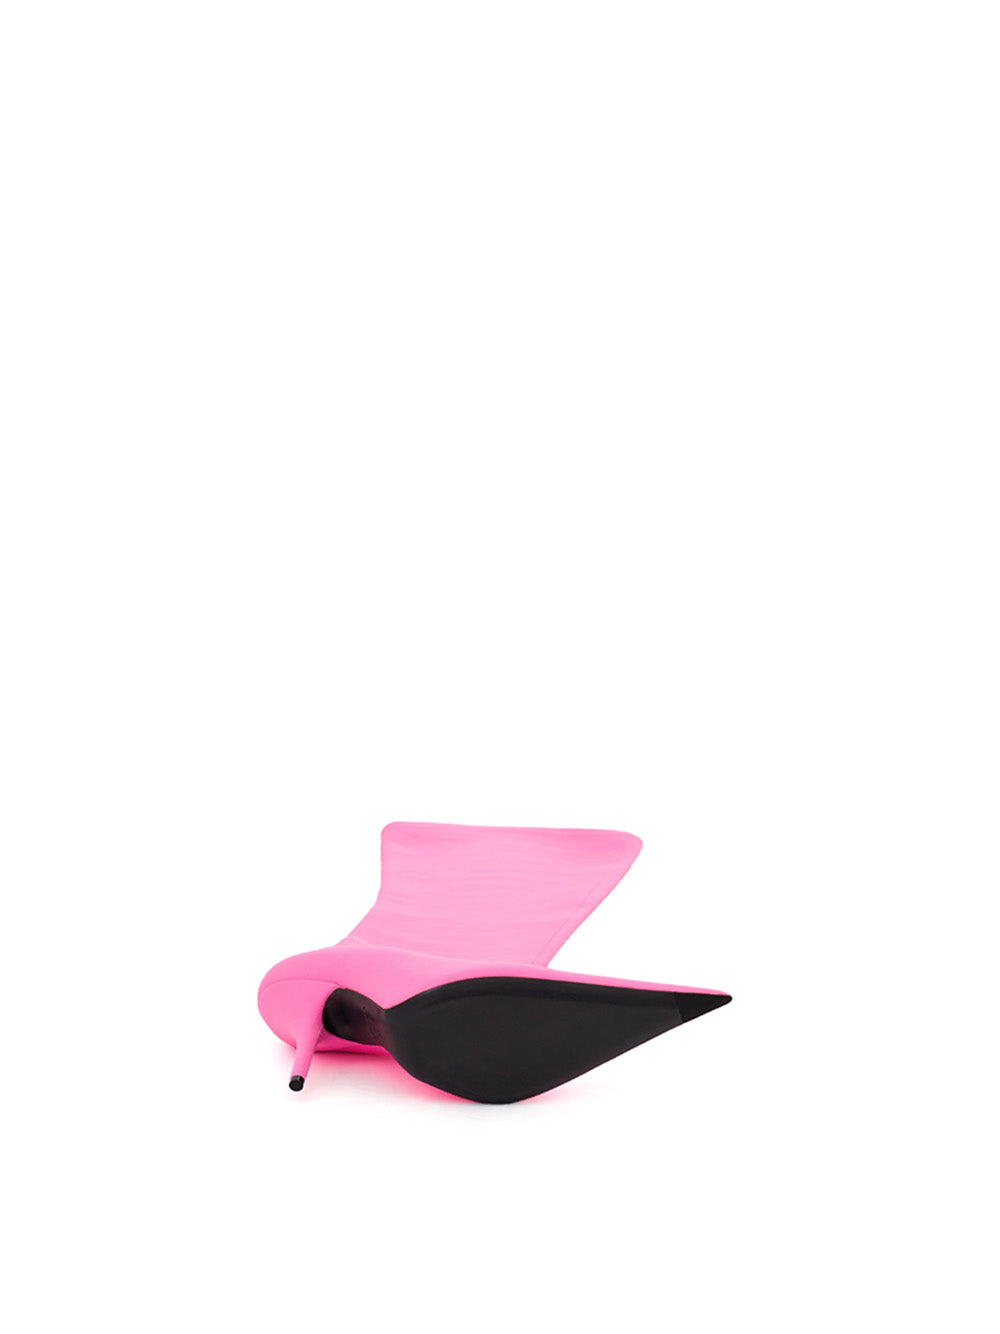 Fashionsarah.com Fashionsarah.com Balenciaga Over The Knee Neon Pink Boot